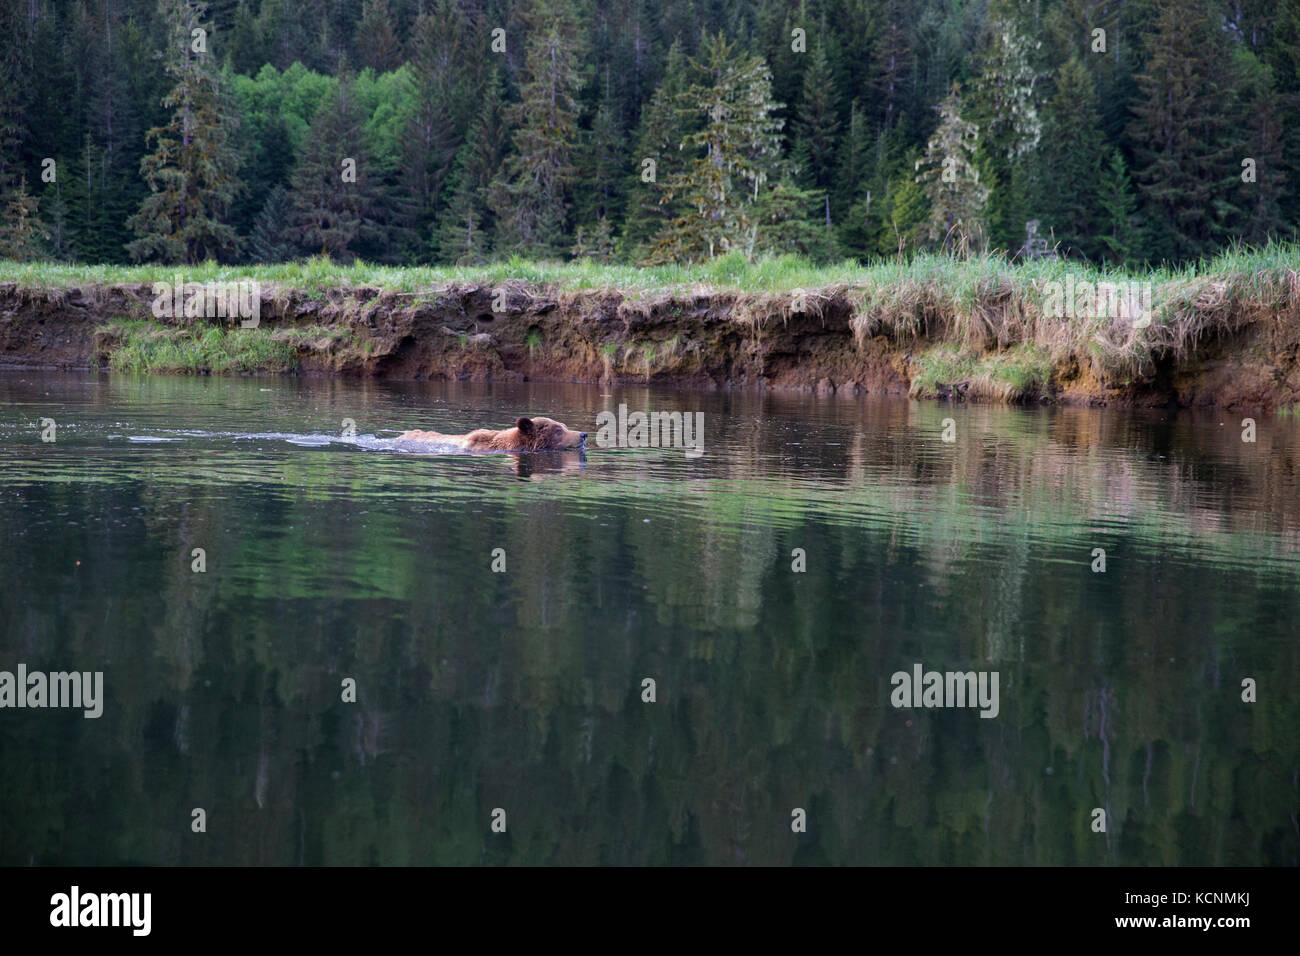 Orso grizzly (Ursus arctos horriblis), grande graffiato maschio, nuoto, kwinimass estuario, British Columbia, Canada. Foto Stock